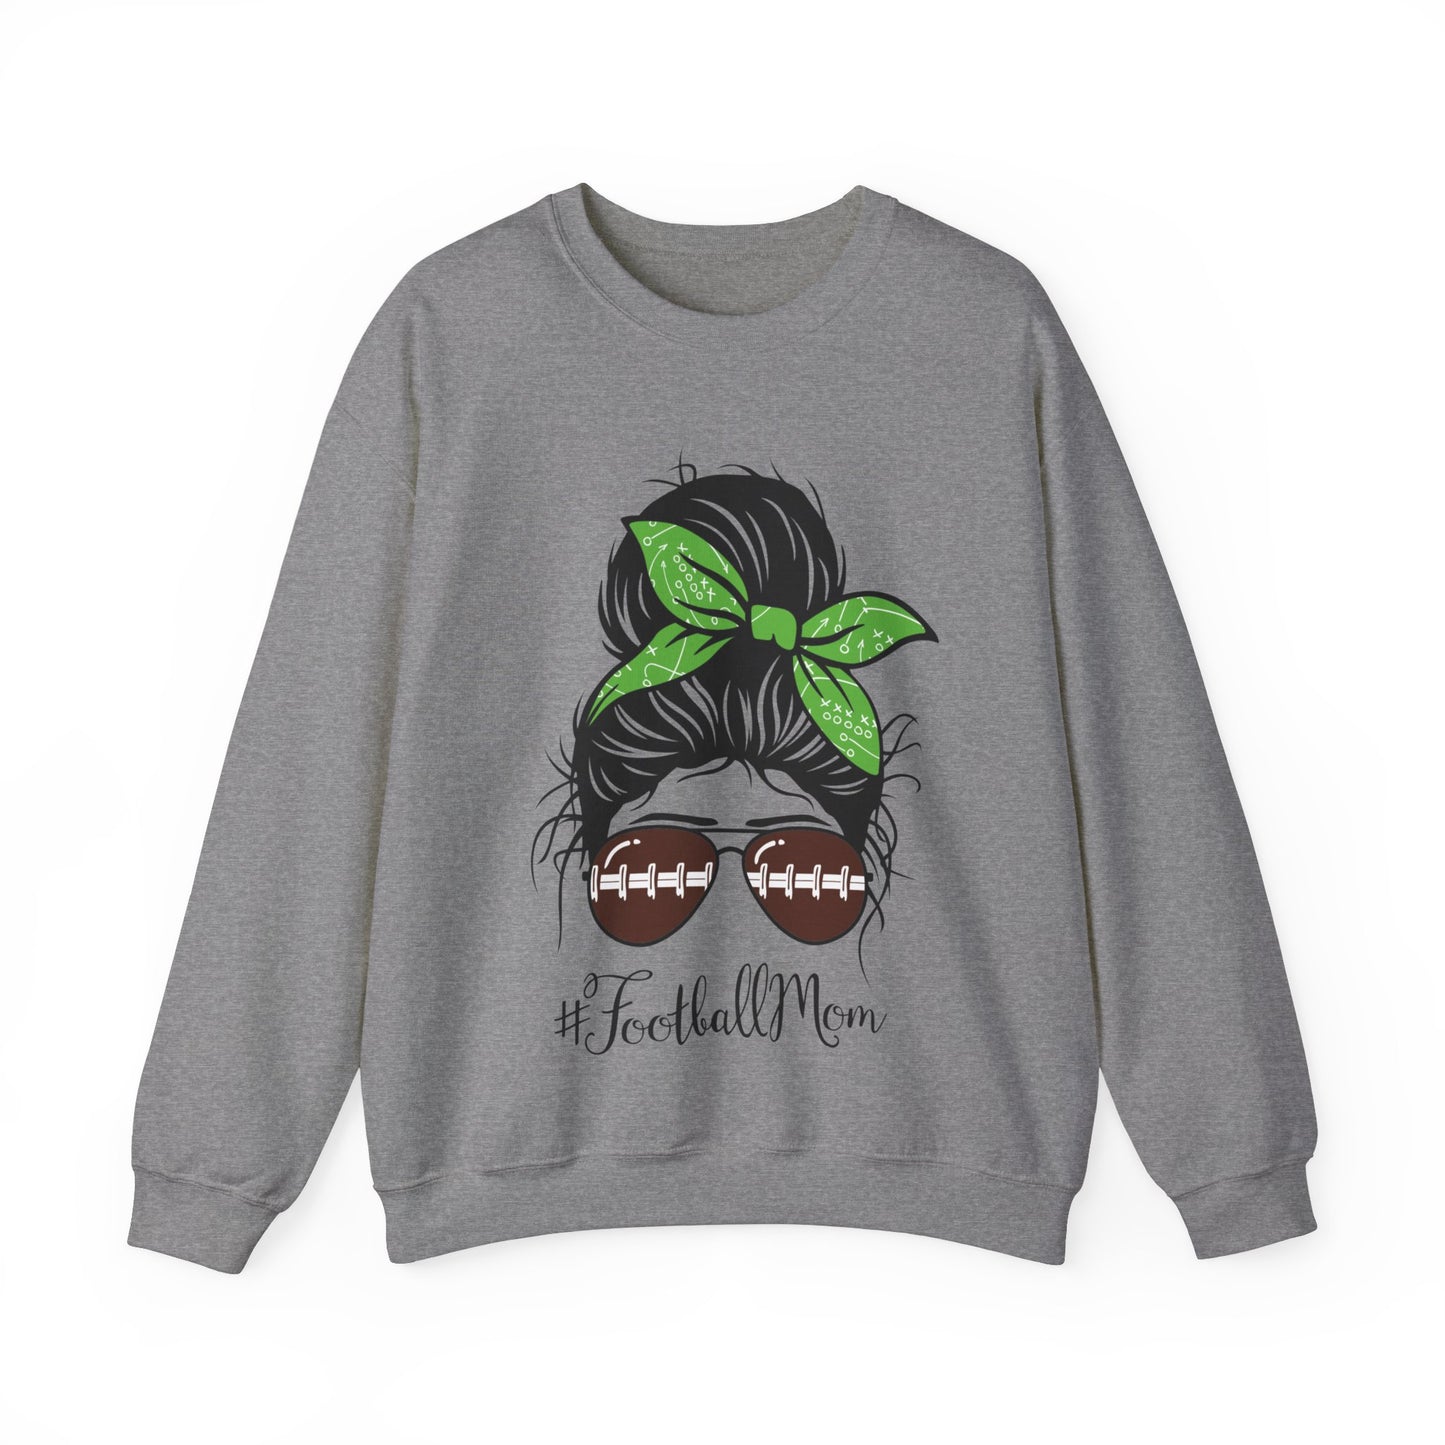 Football Mom - Crewneck Sweatshirt